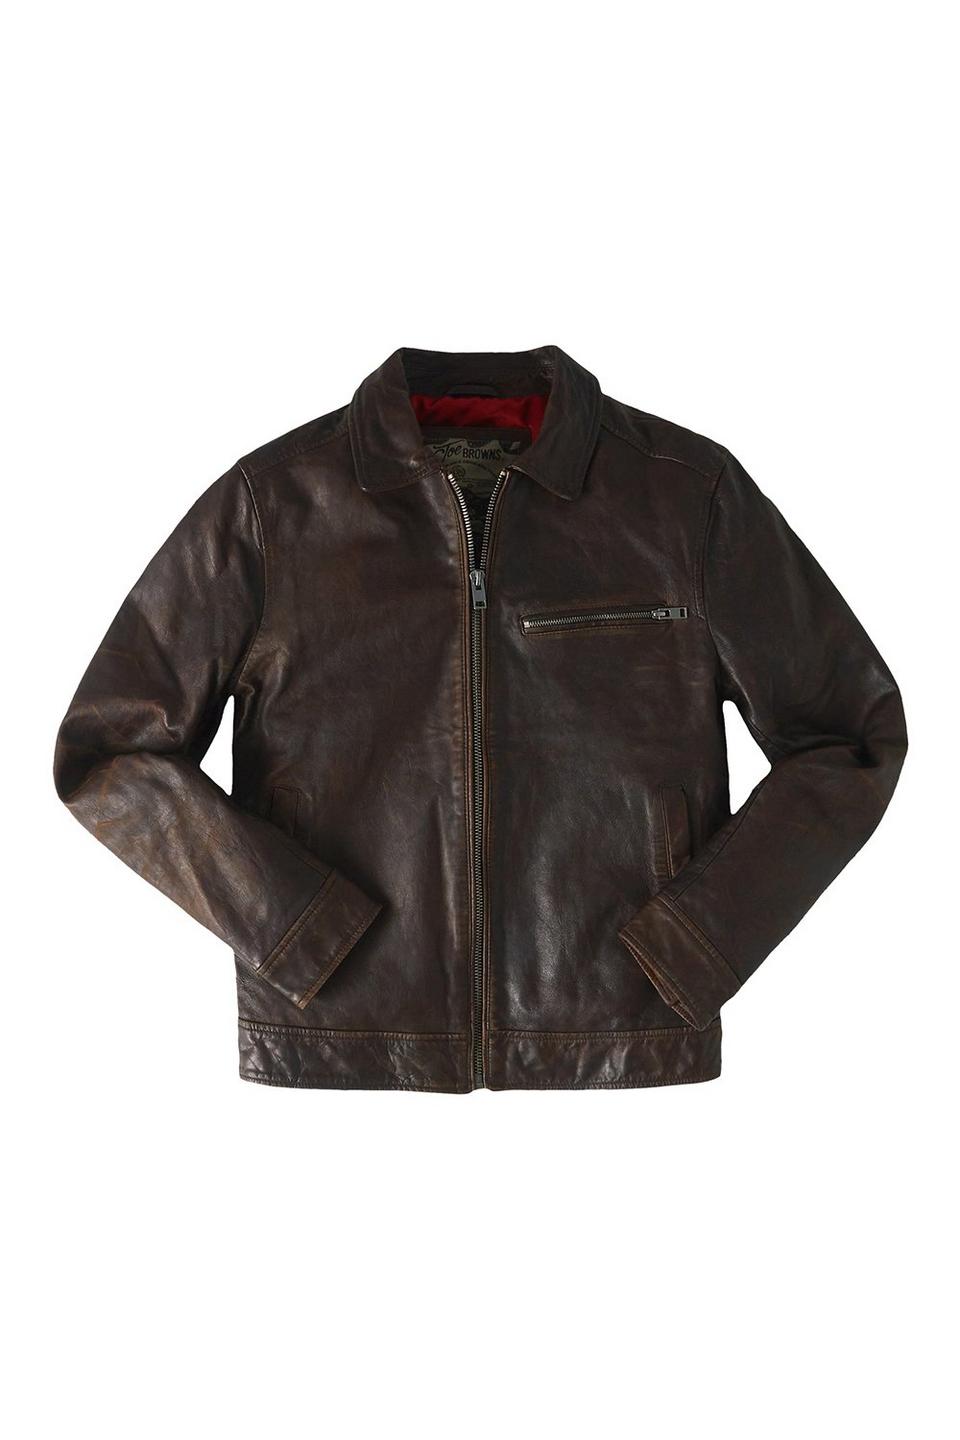 Jackets & Coats | Classic Old School Leather Jacket | Joe Browns